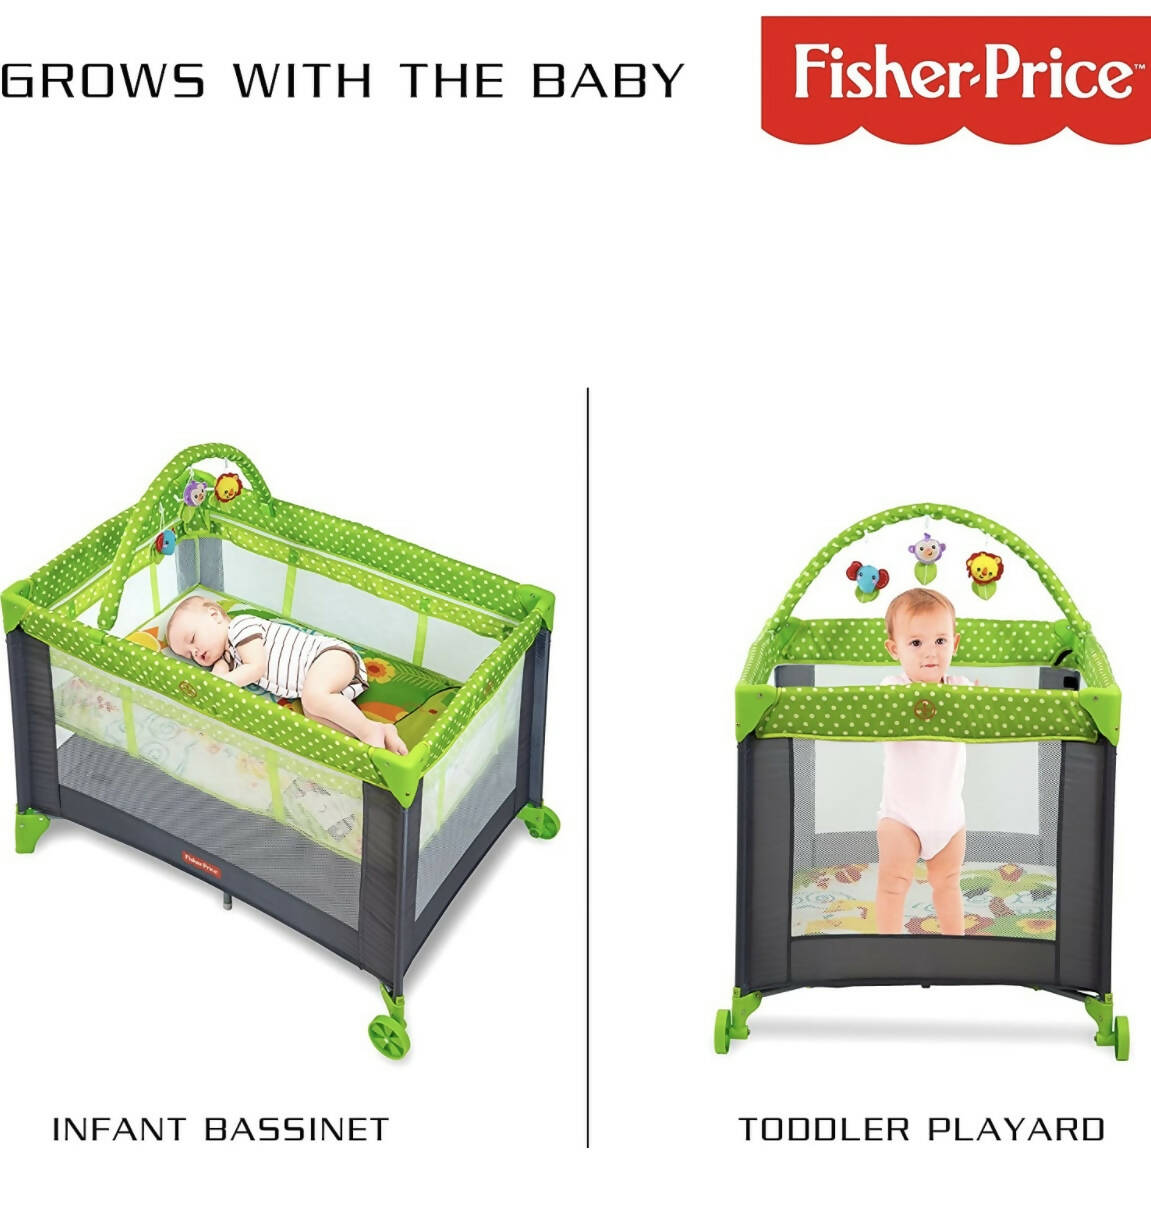 FISHER PRICE Portable Bed/Cot cum Playpen, Dimensions101L x 75W x 105H Cm